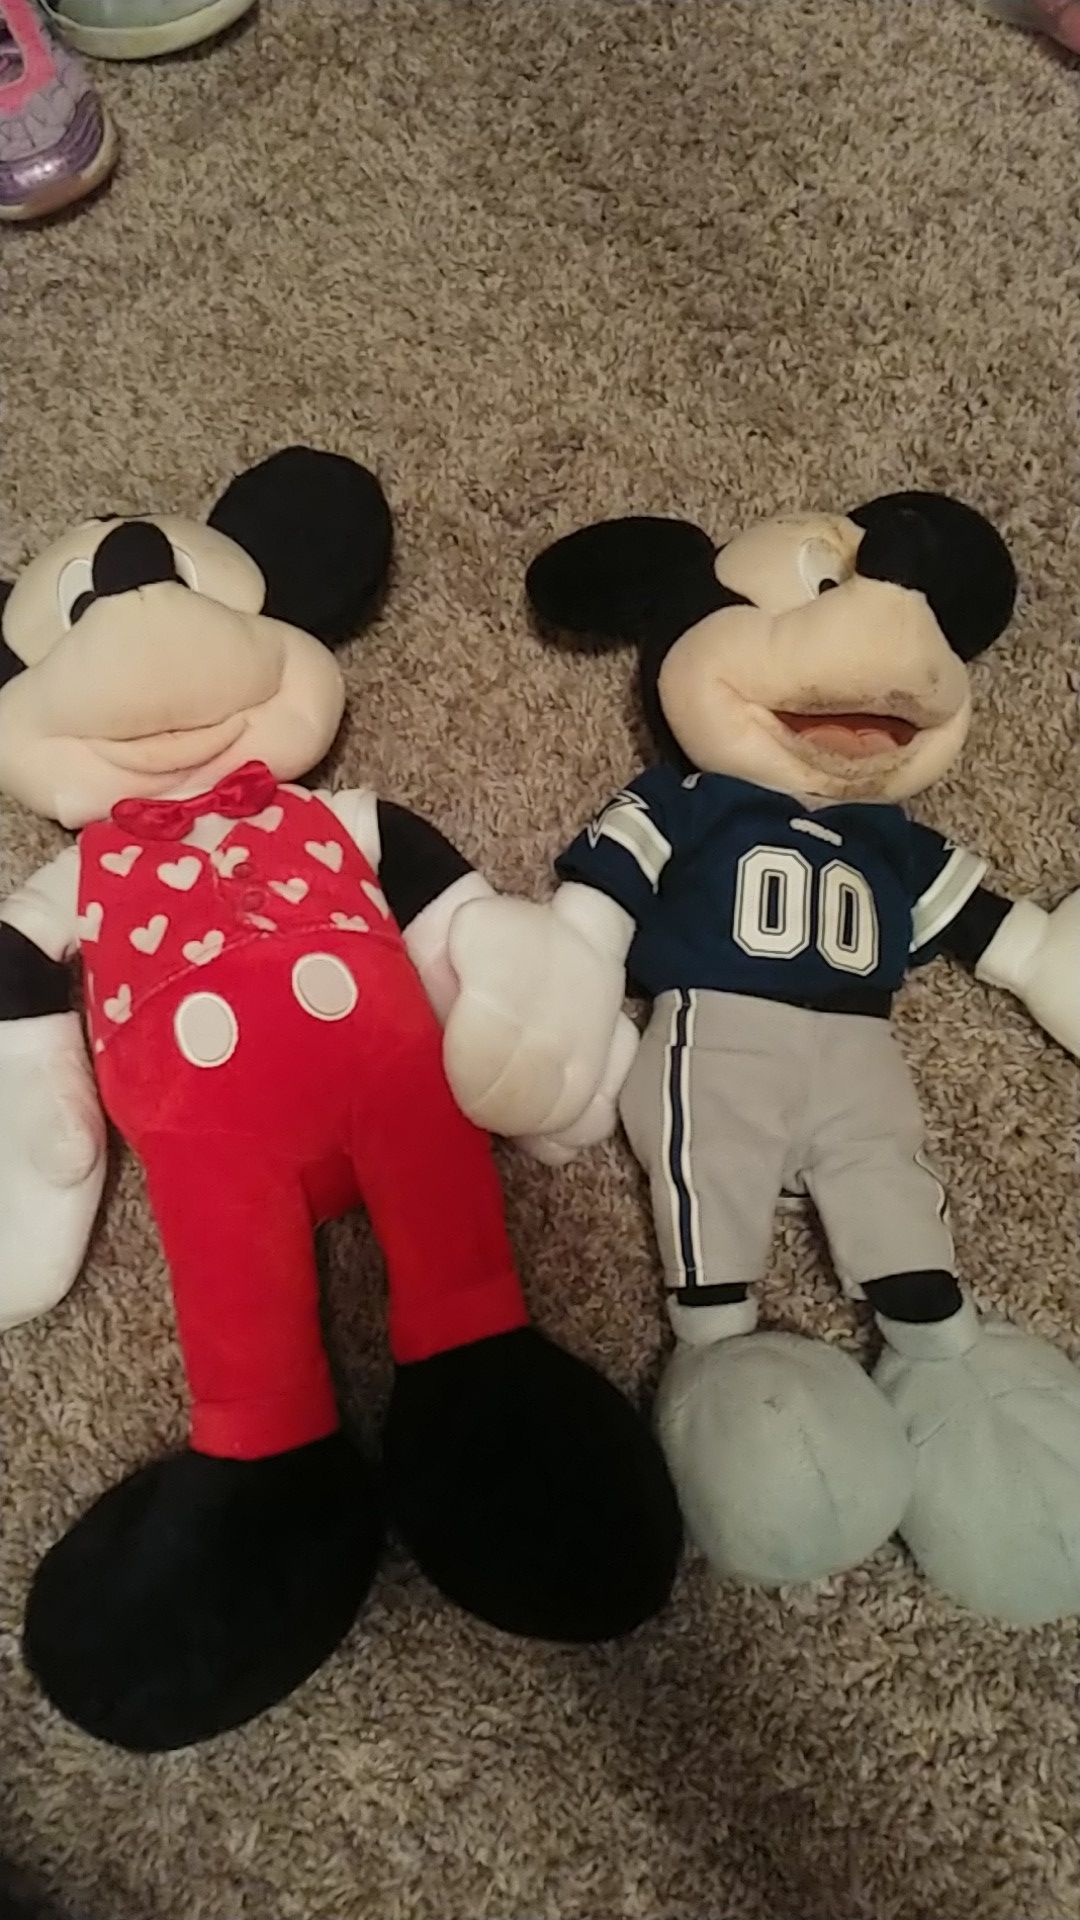 Mickey stuffed animals